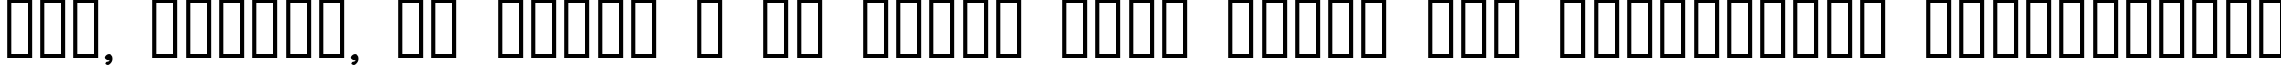 Пример написания шрифтом Curlmudgeon Italic текста на украинском